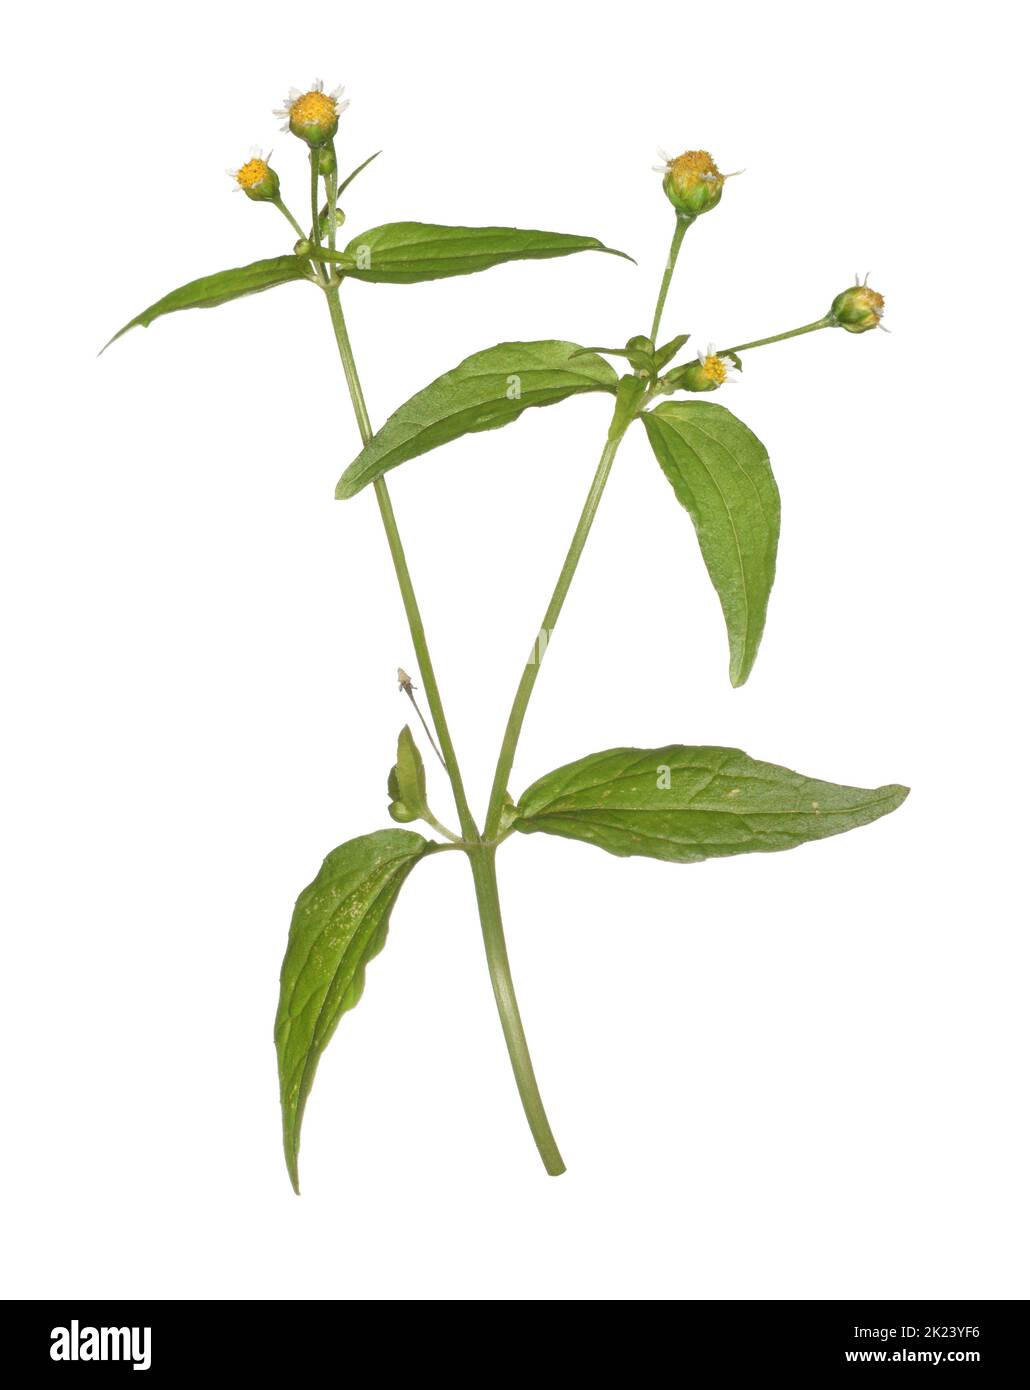 Gallant-soldier - Gallinsoga parviflora Stock Photo